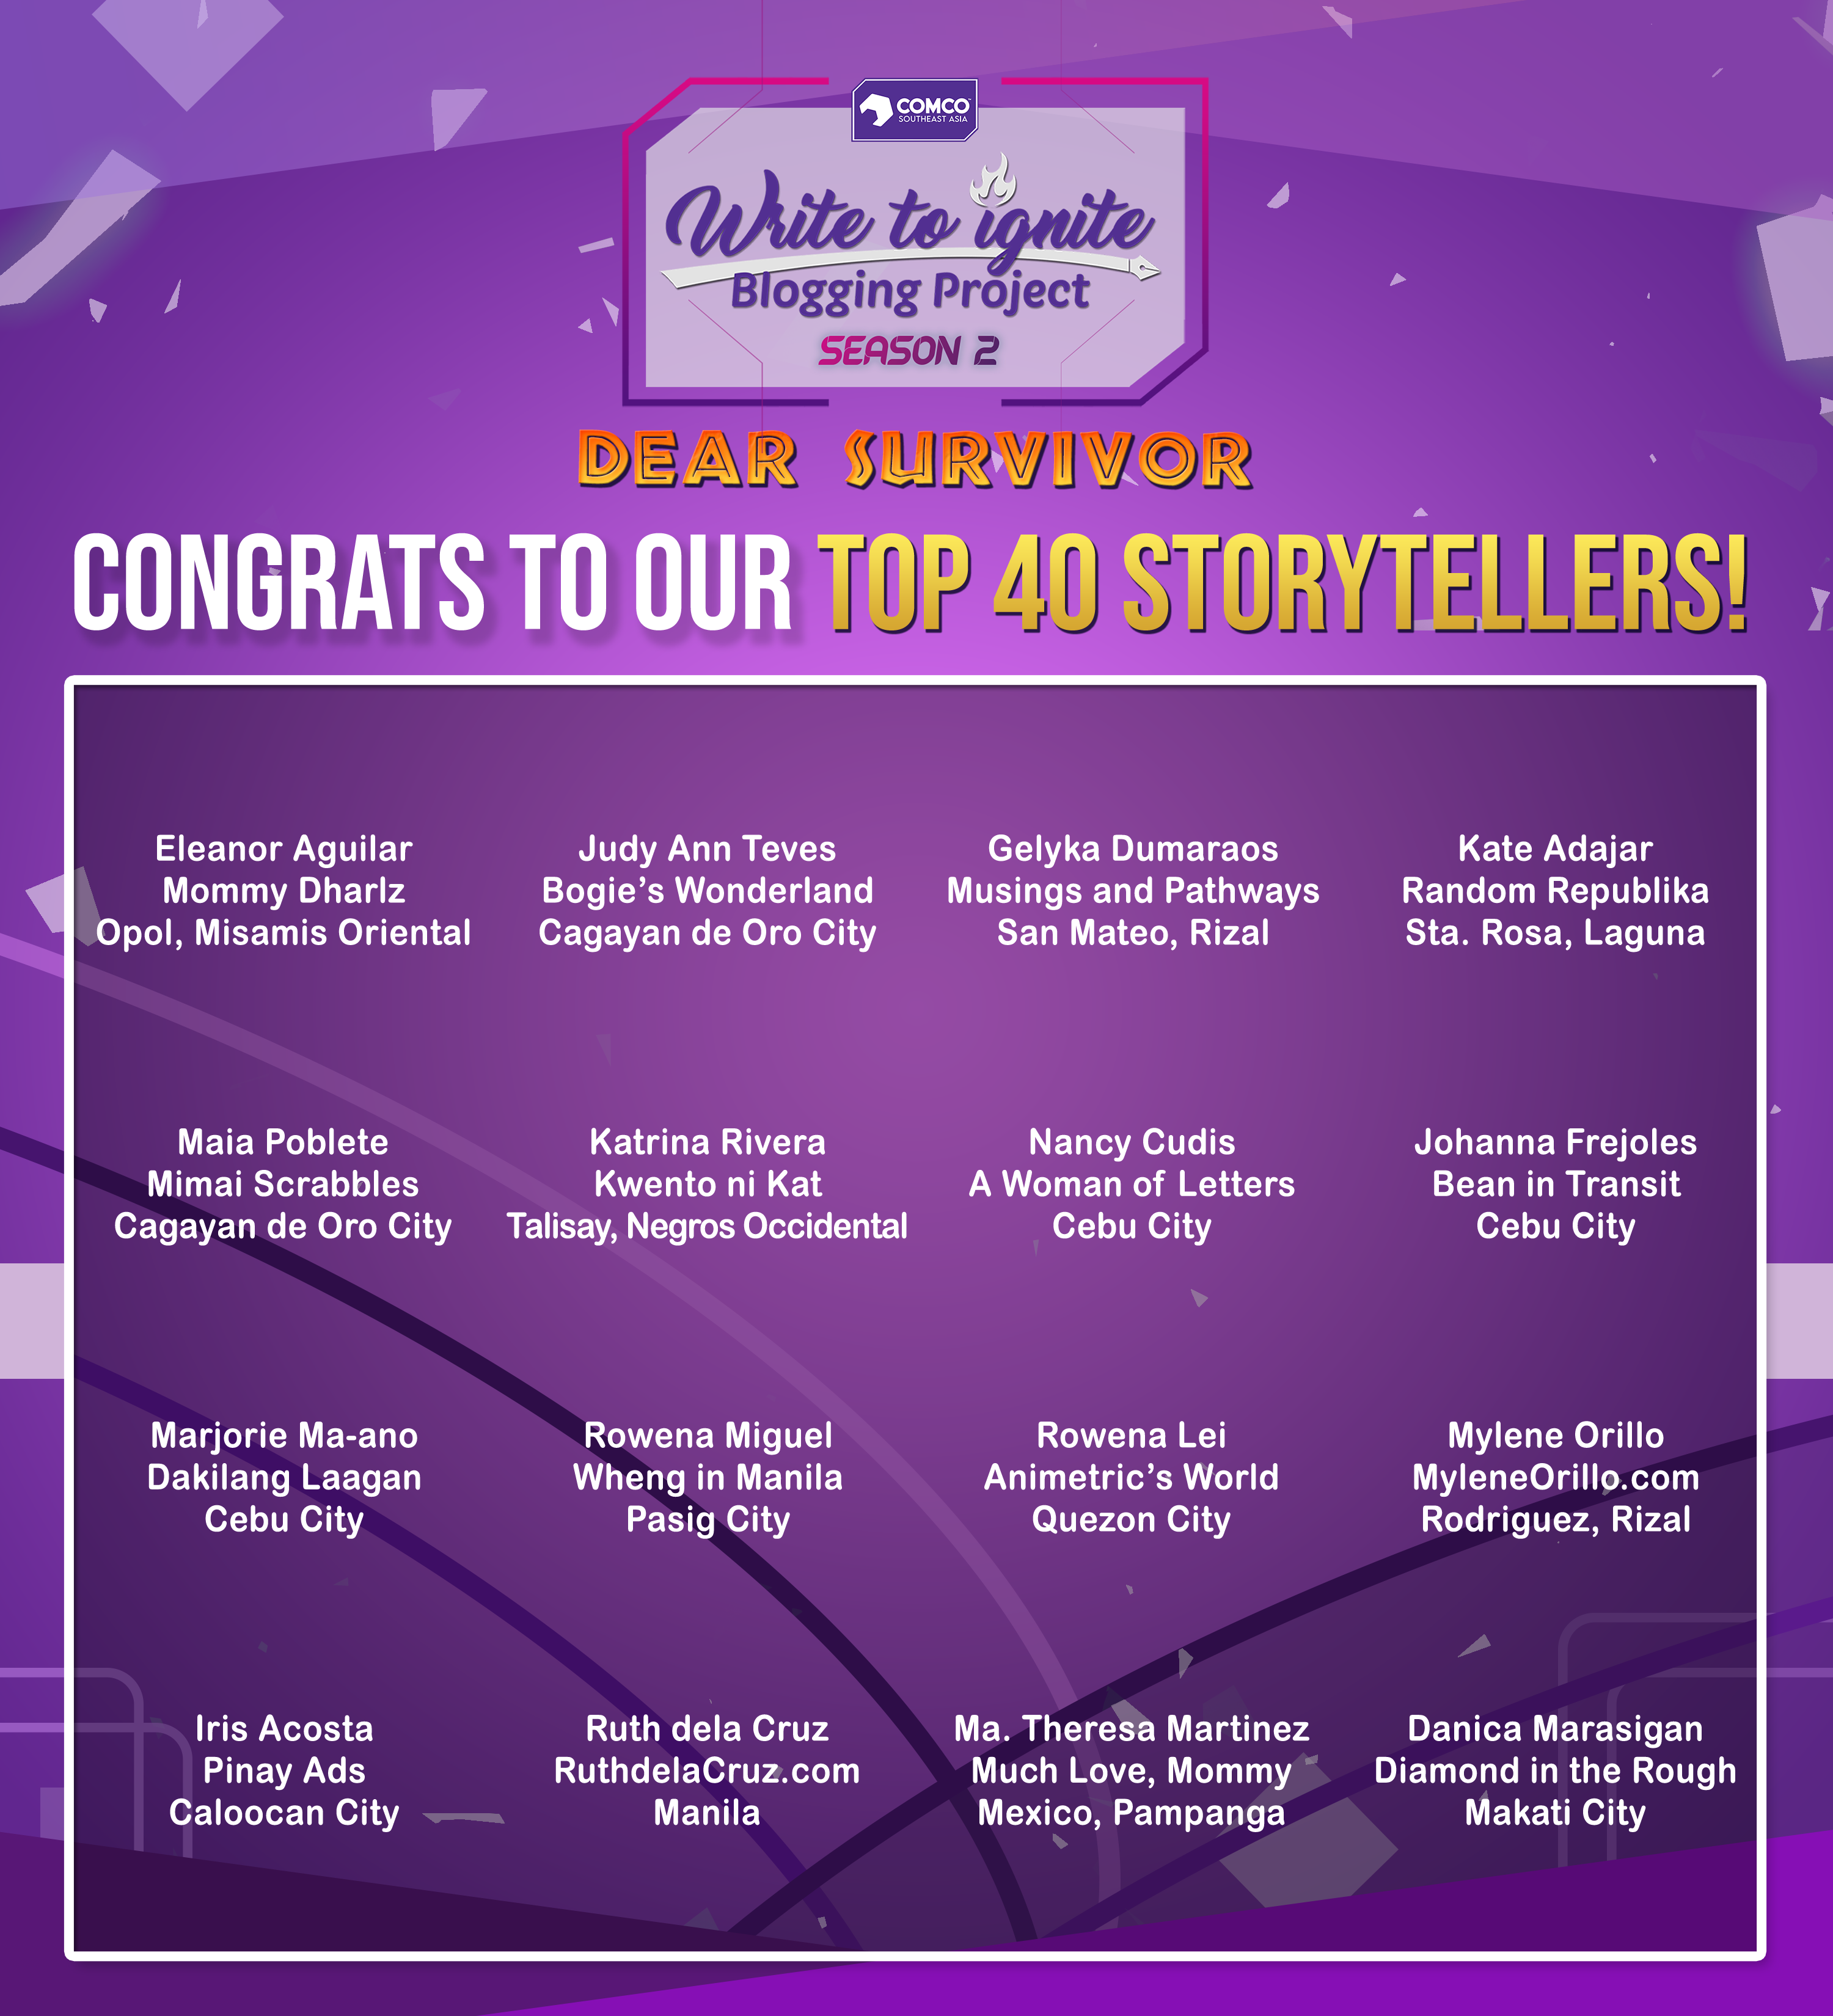 Write to Ignite Season 2 - Top 40 Storytellers - ComCo Southeast Asia - New PR Smart Social - Best agency